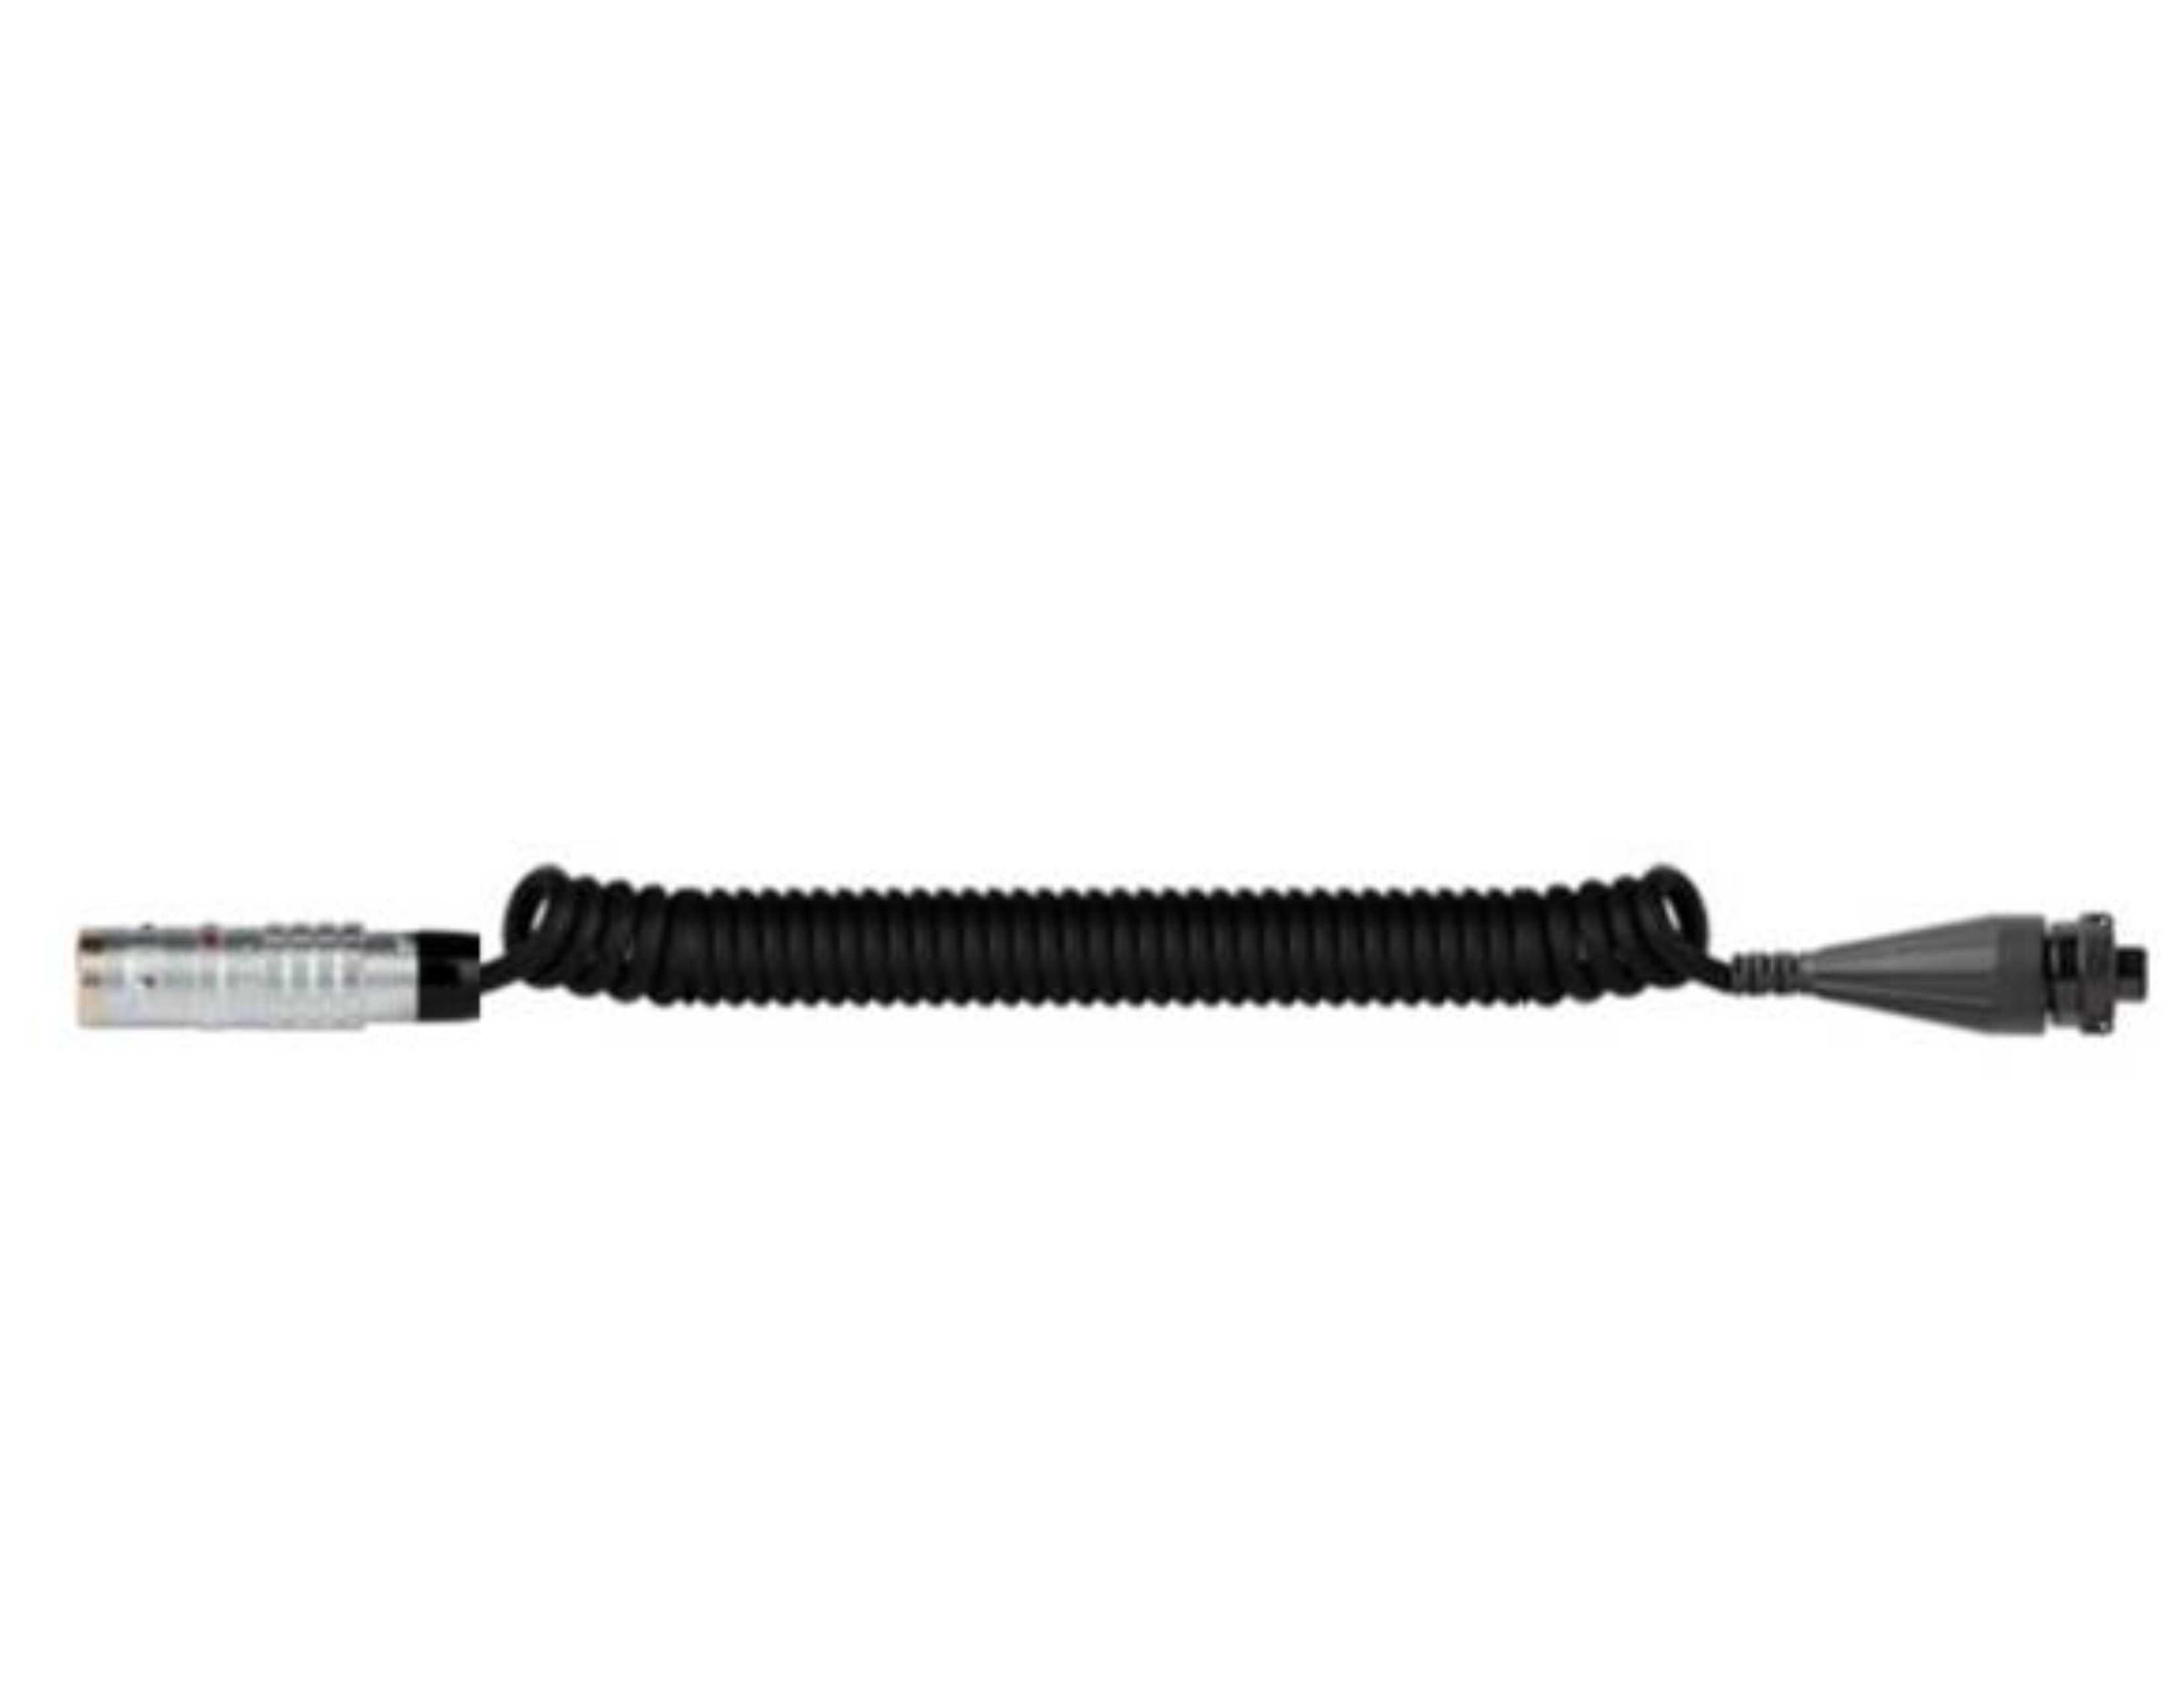 Cable roscado poliuretano negro para equipo IRD DataPac ® y Enpac   CST-CB104-C22-010-D2CG-SF